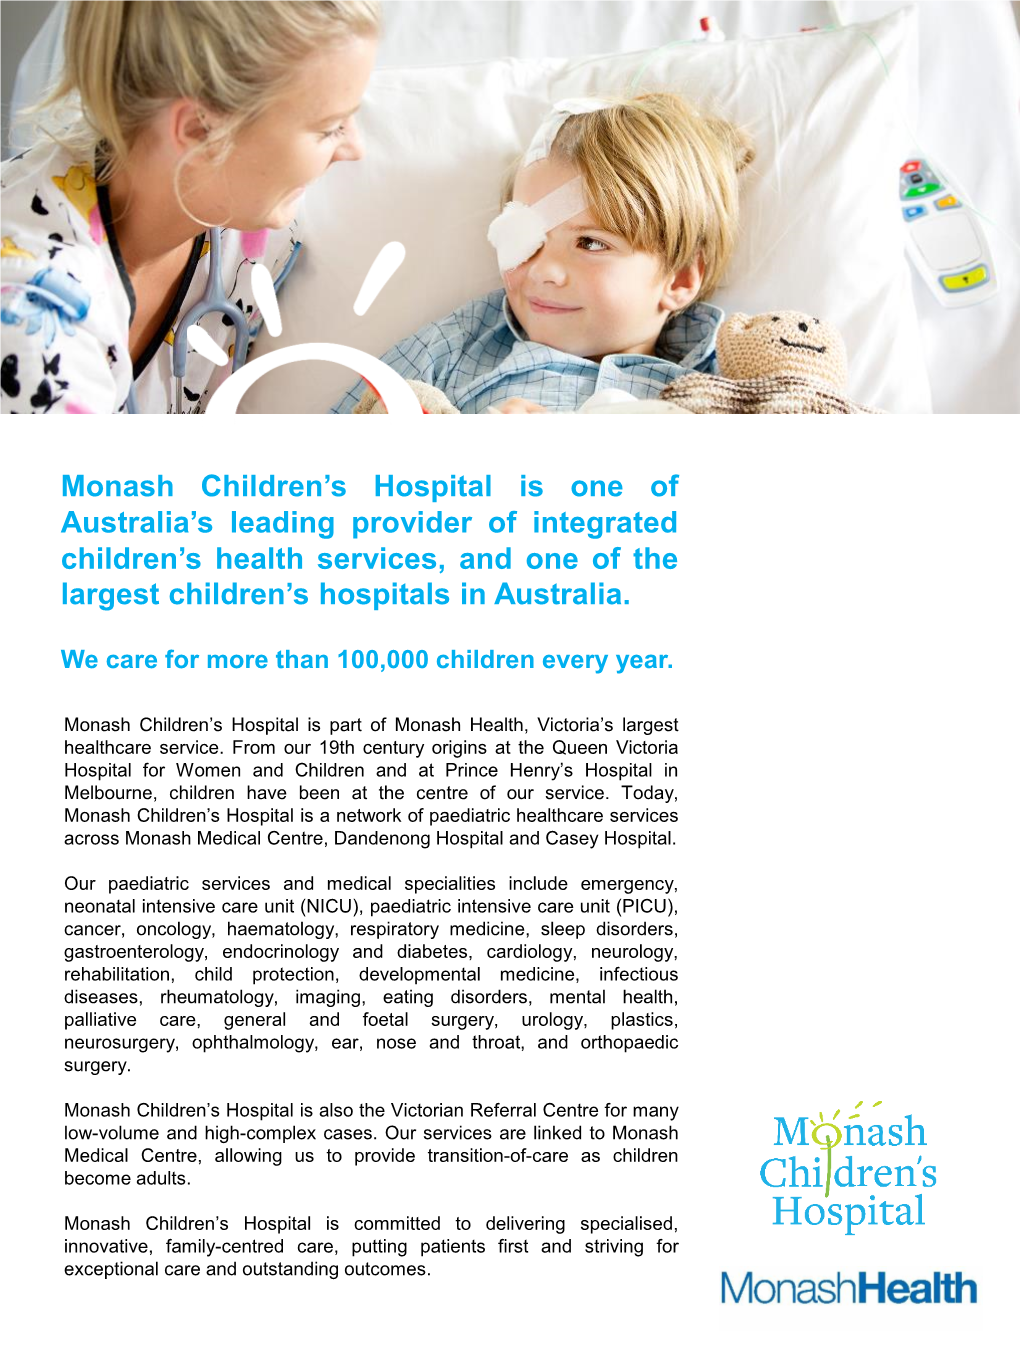 Monash Children's Hospital Fast Facts 15-16